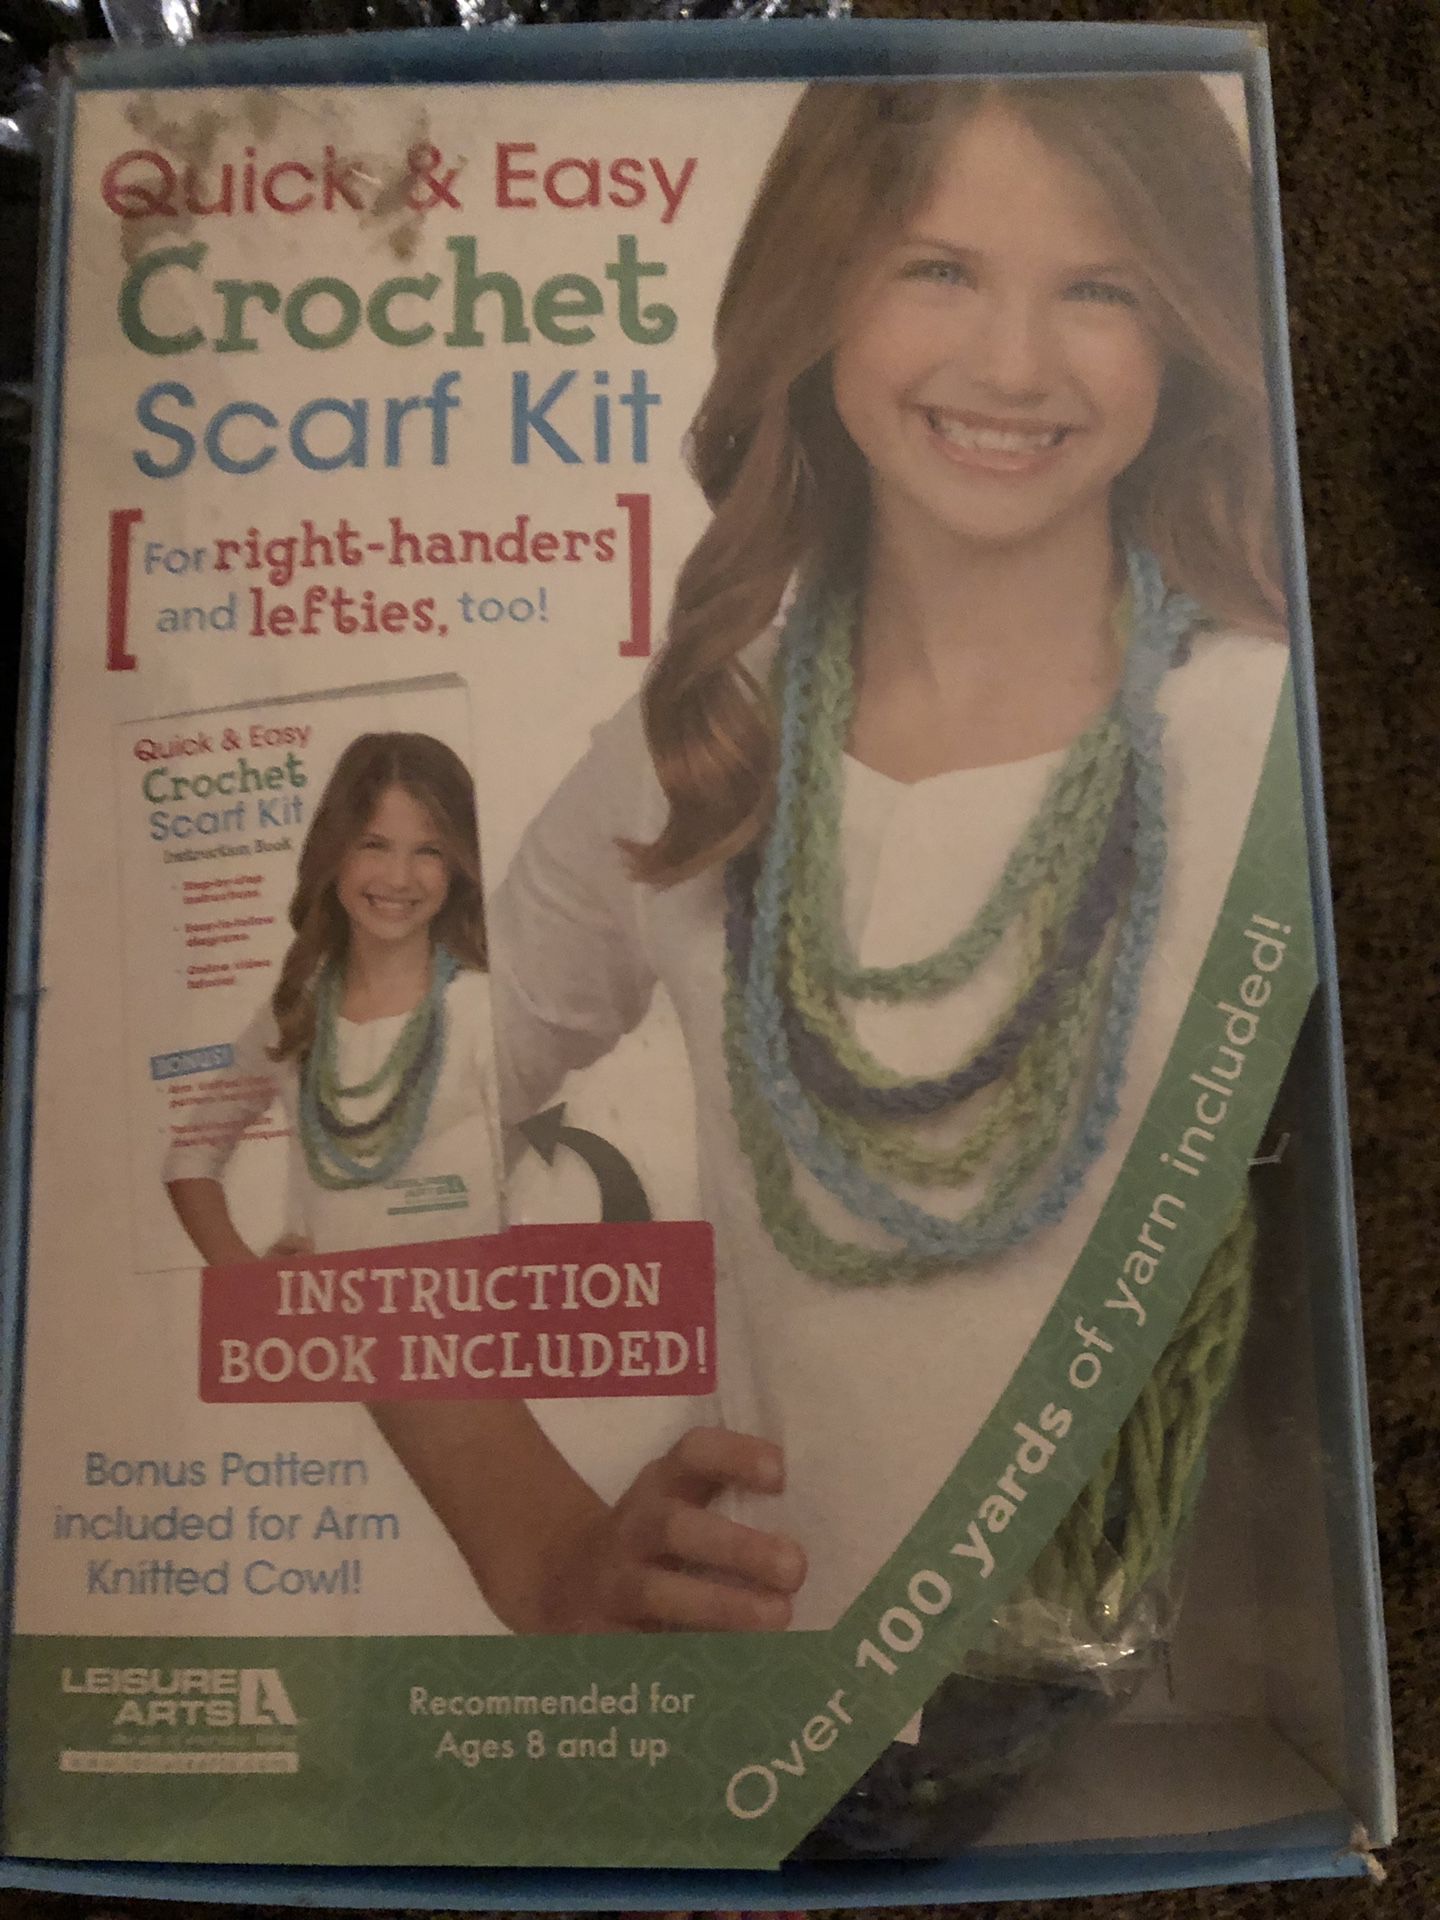 Crochet scarf kit